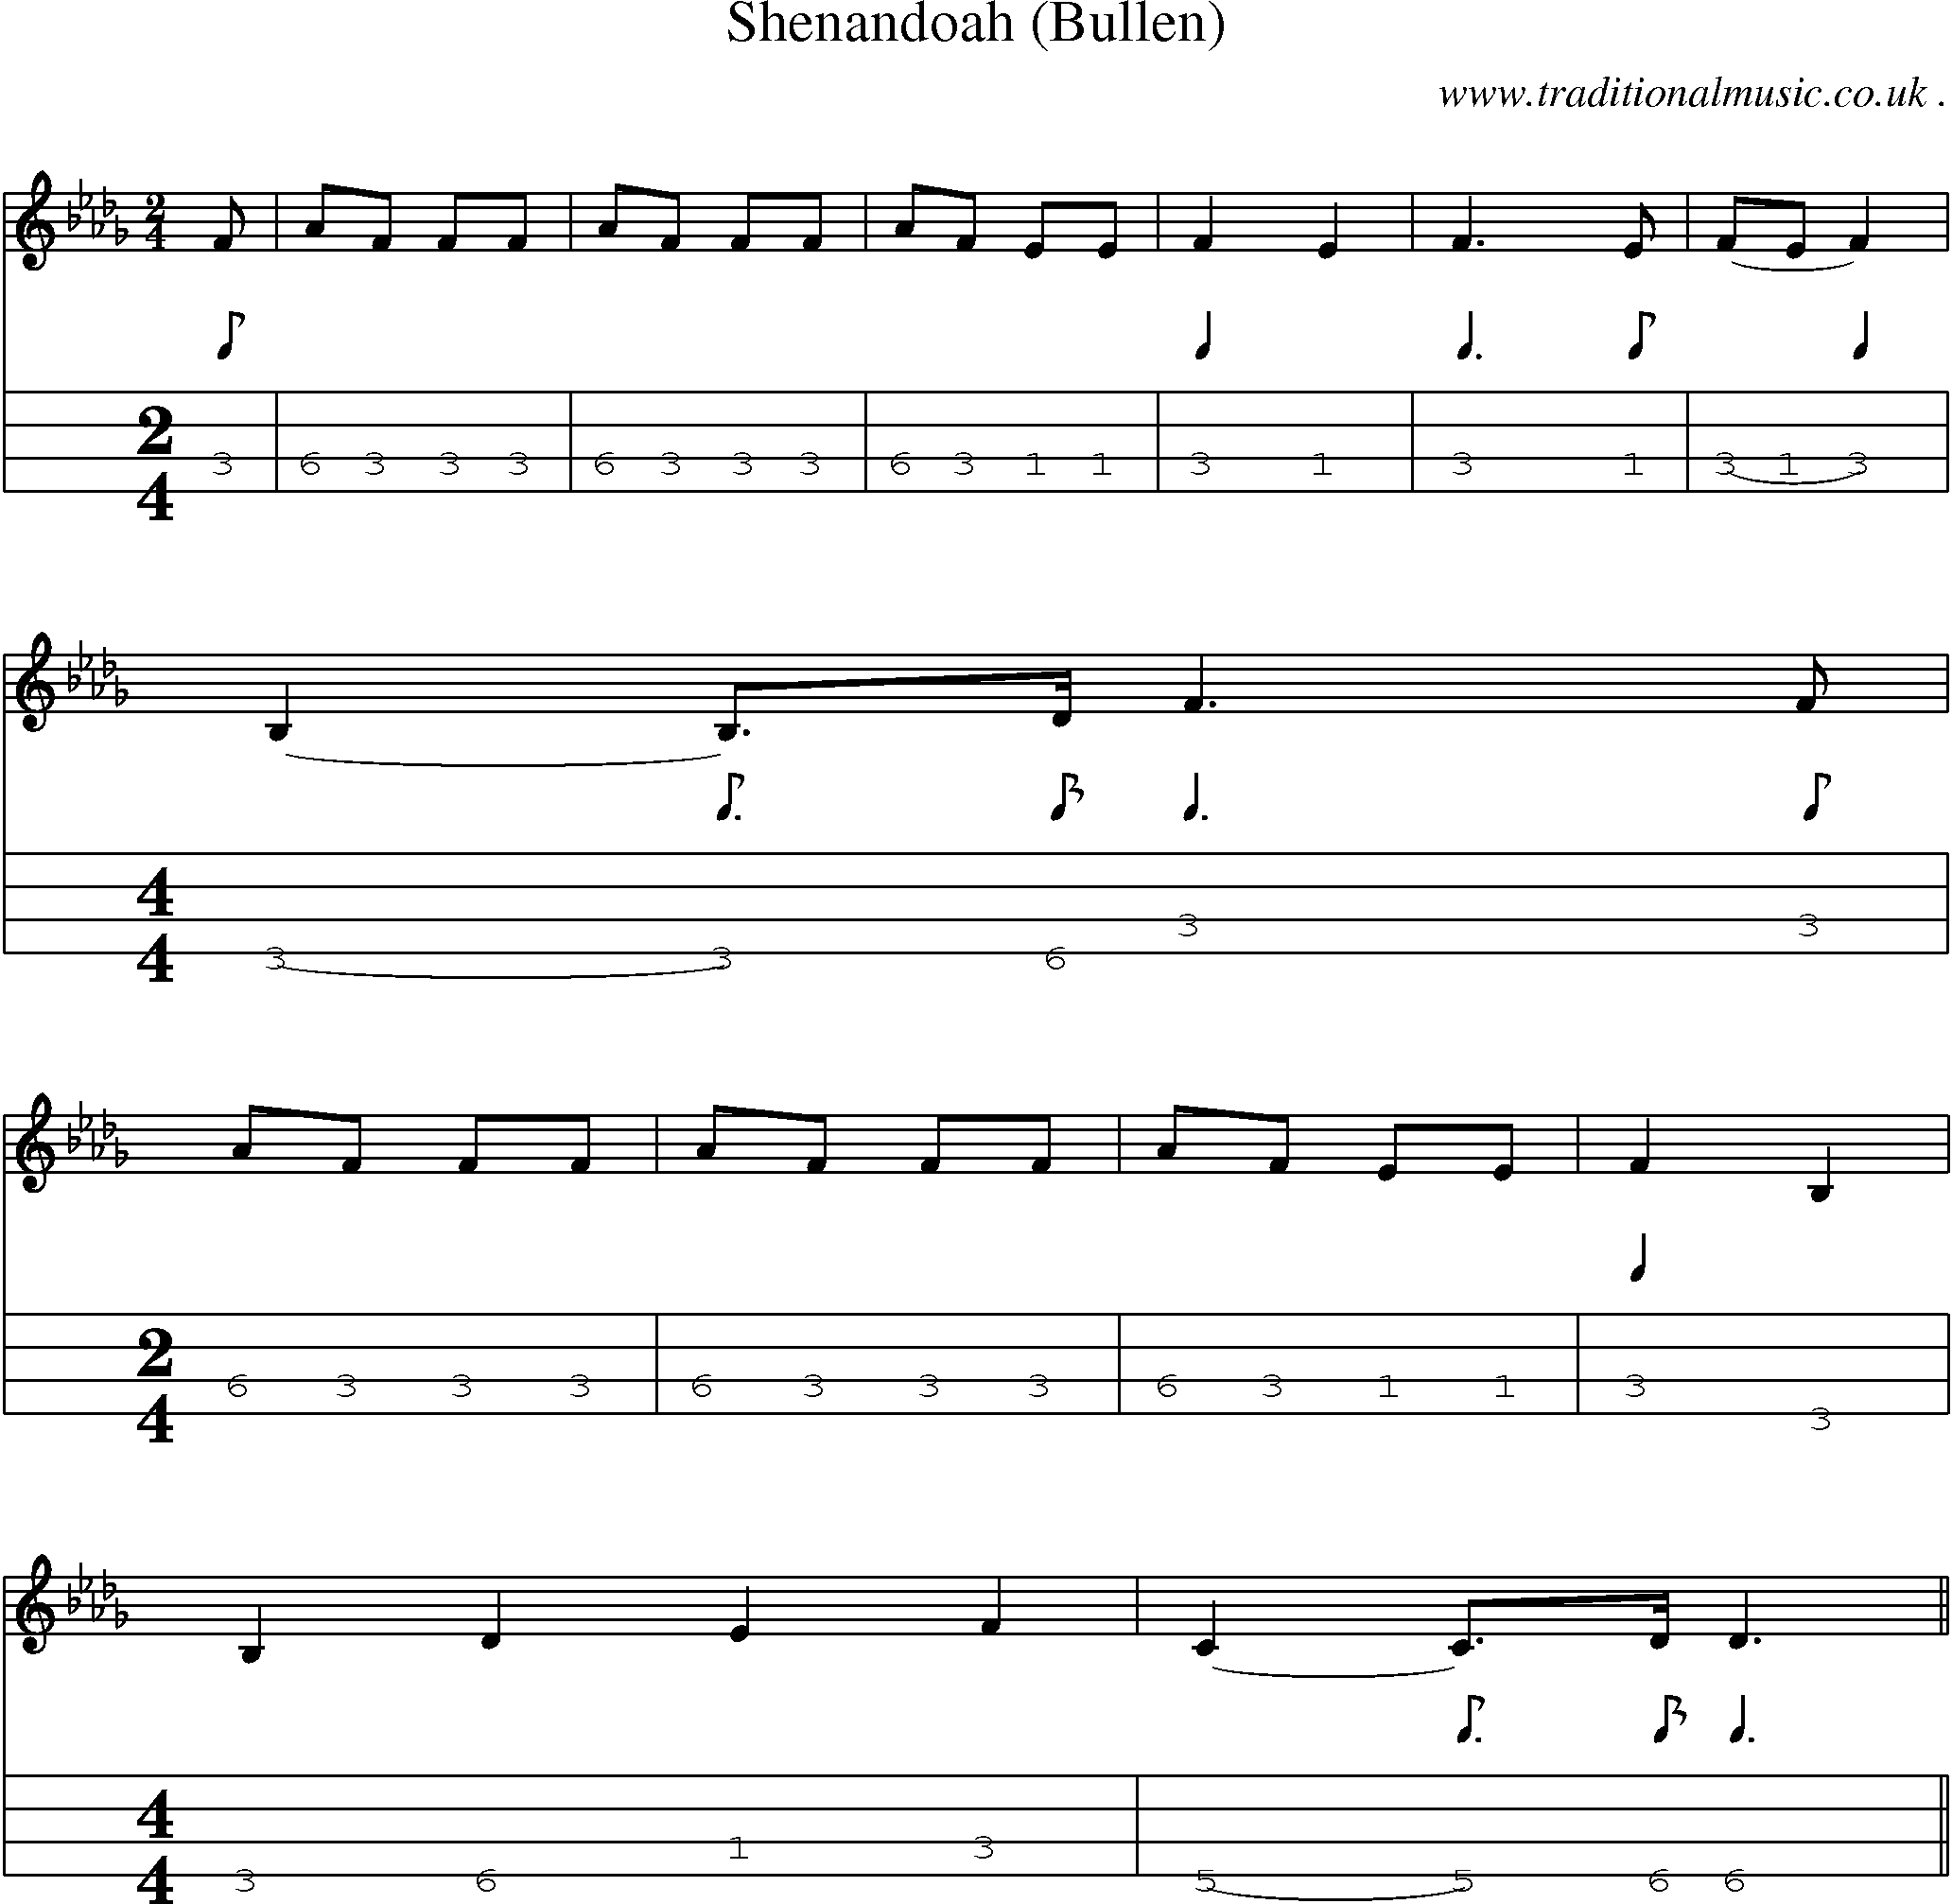 Sheet-Music and Mandolin Tabs for Shenandoah (bullen)